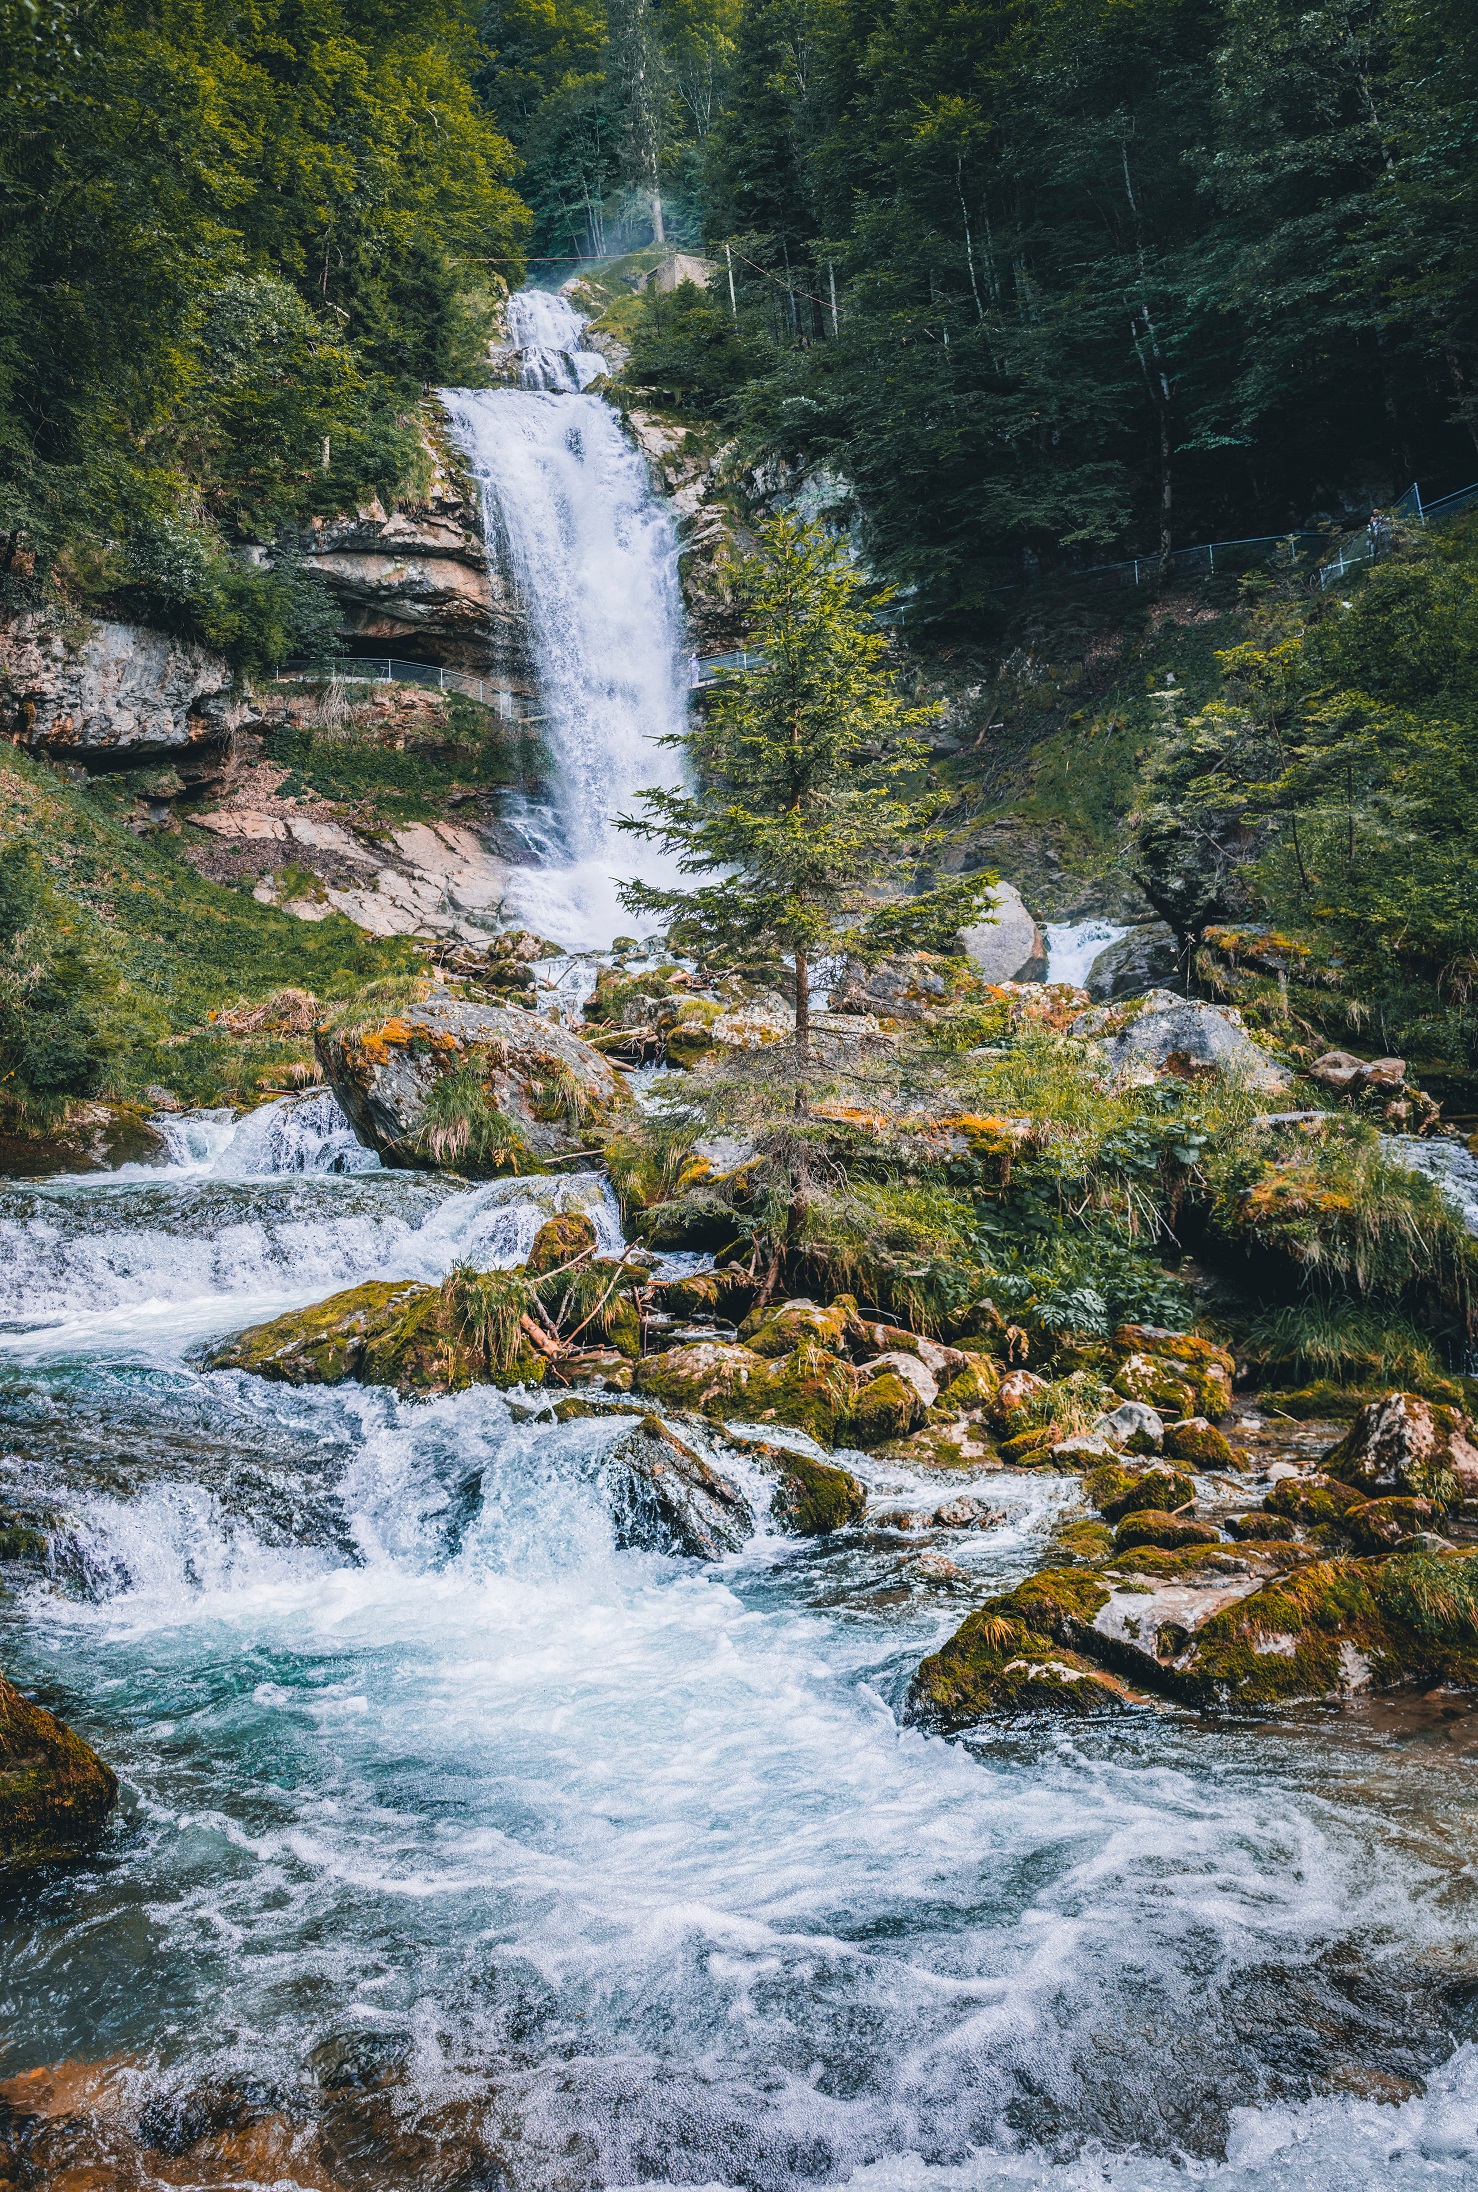 A mountainous waterfall